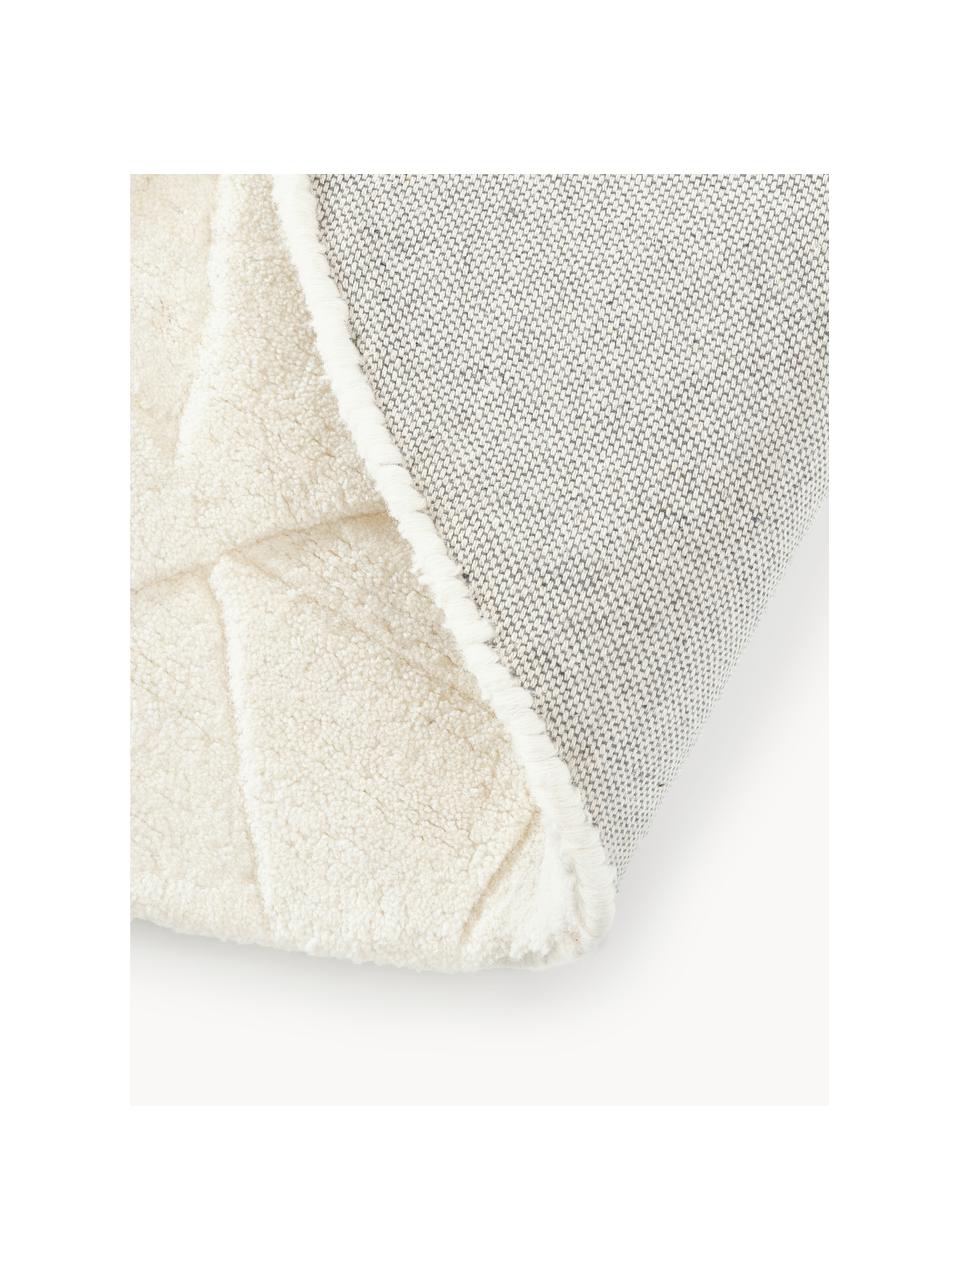 Alfombra redonda artesanal de lana Rory, Parte superior: 100% lana, Reverso: 100% algodón El material , Blanco crema, Ø 120 cm (Tamaño S)